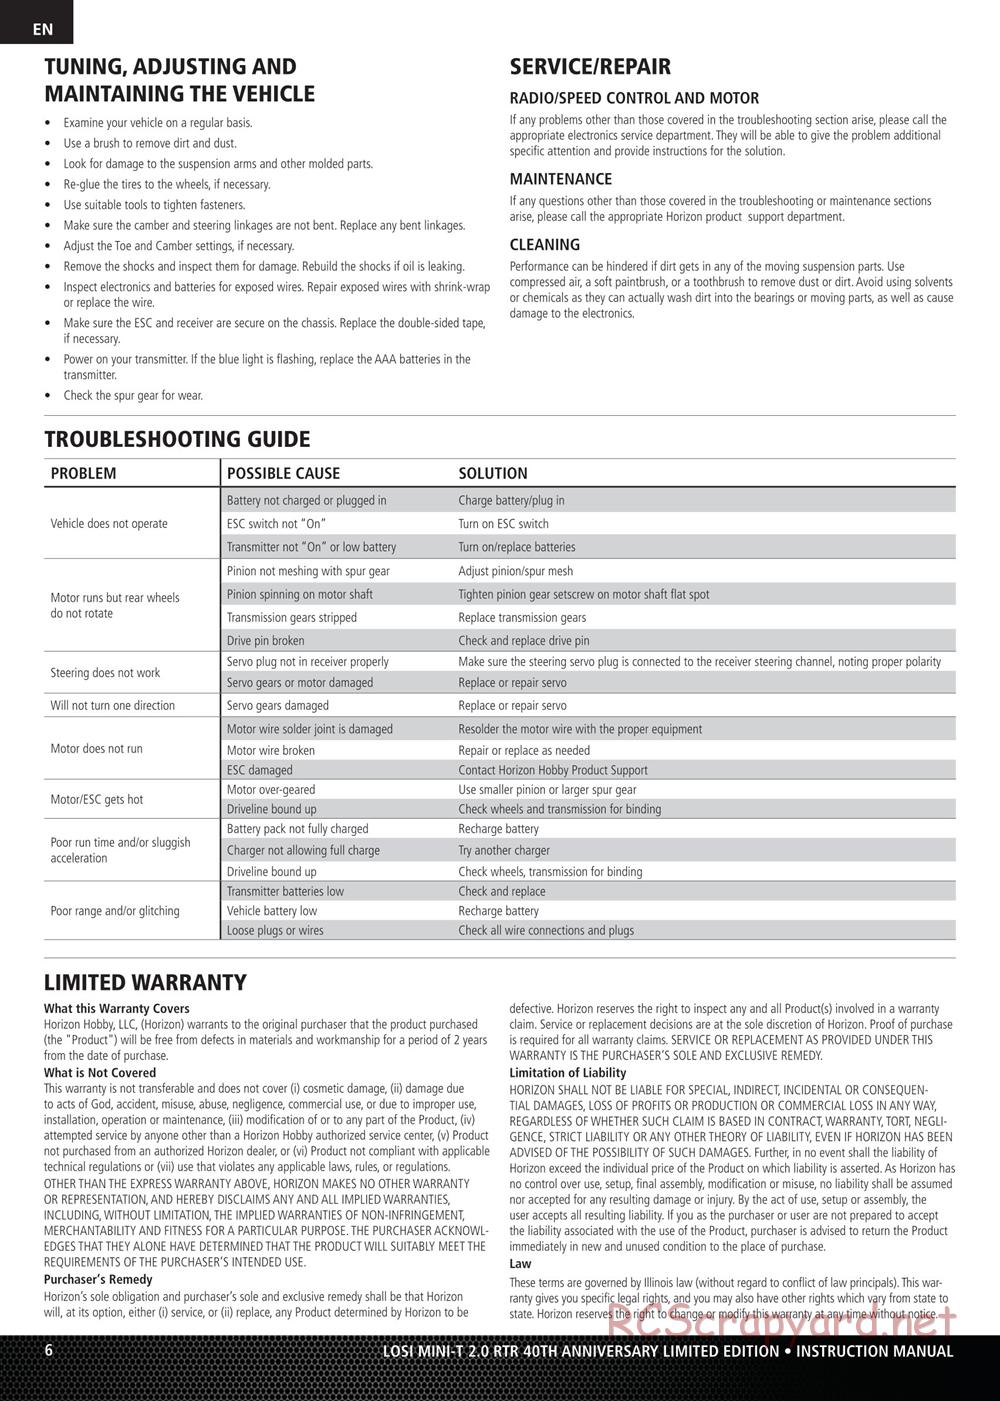 Team Losi - Mini-T 2.0 Limited Edition - Manual - Page 6